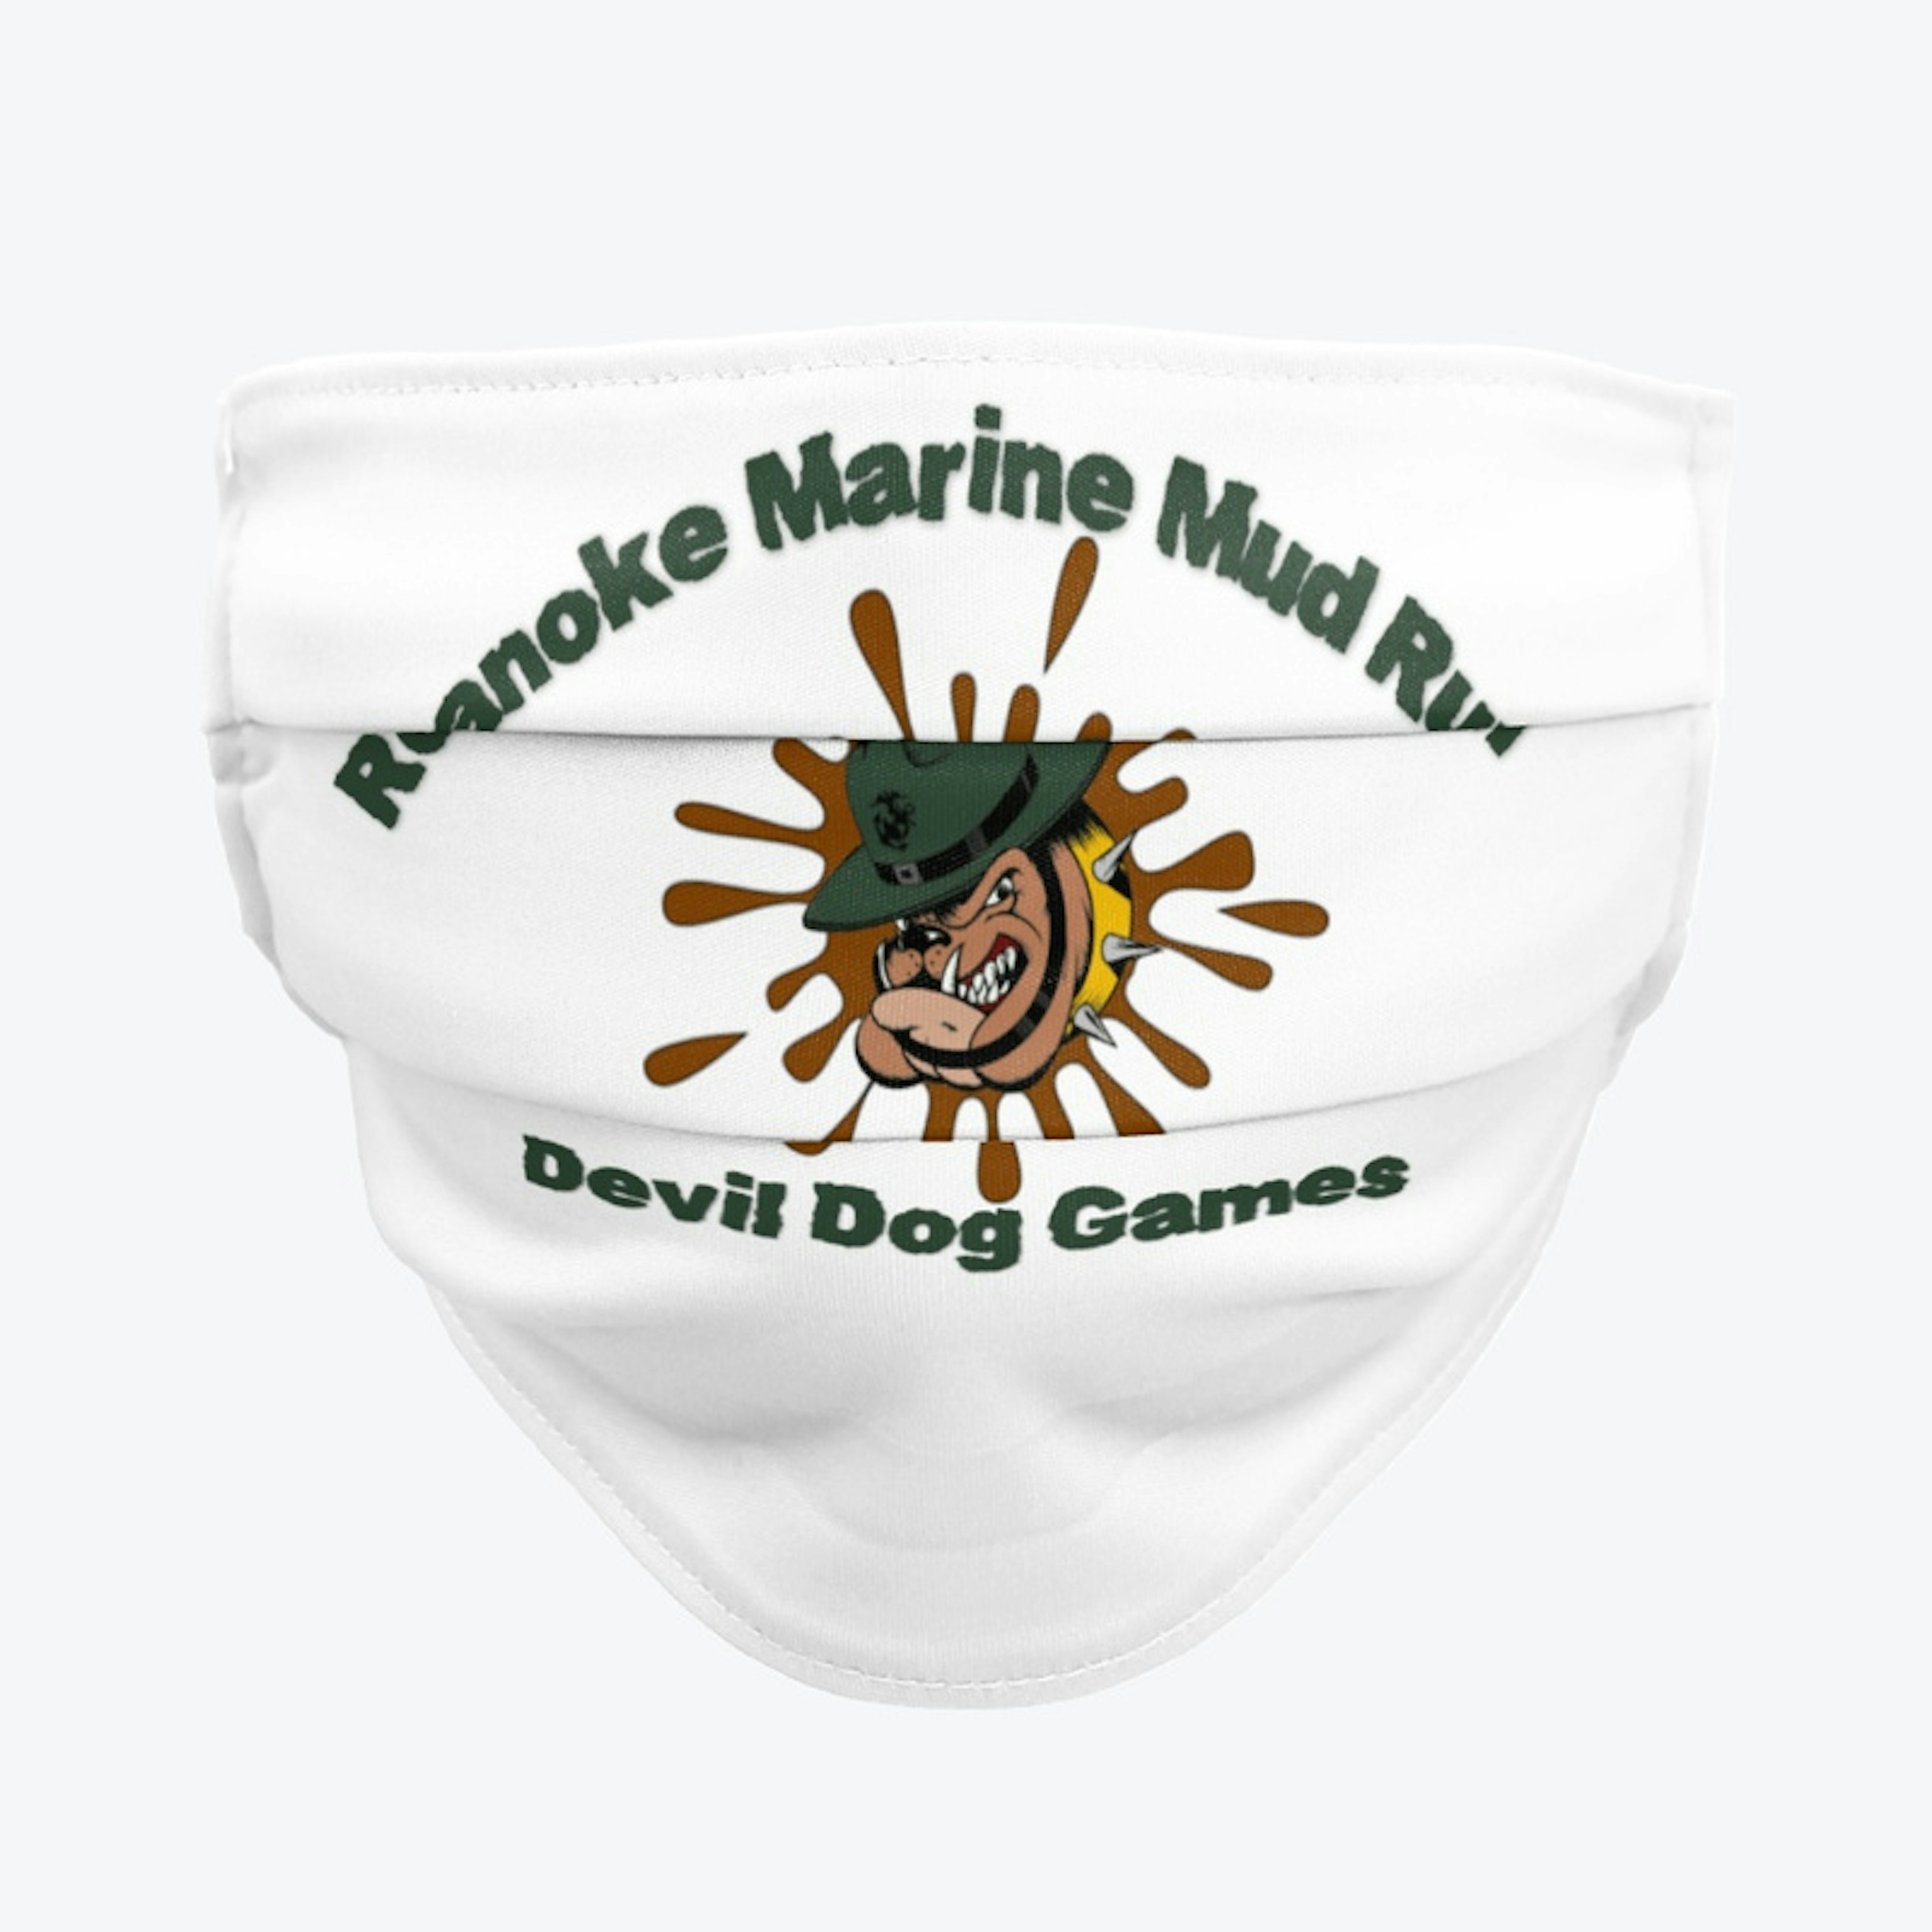 Roanoke Marine Mud Run Devil Dog Games